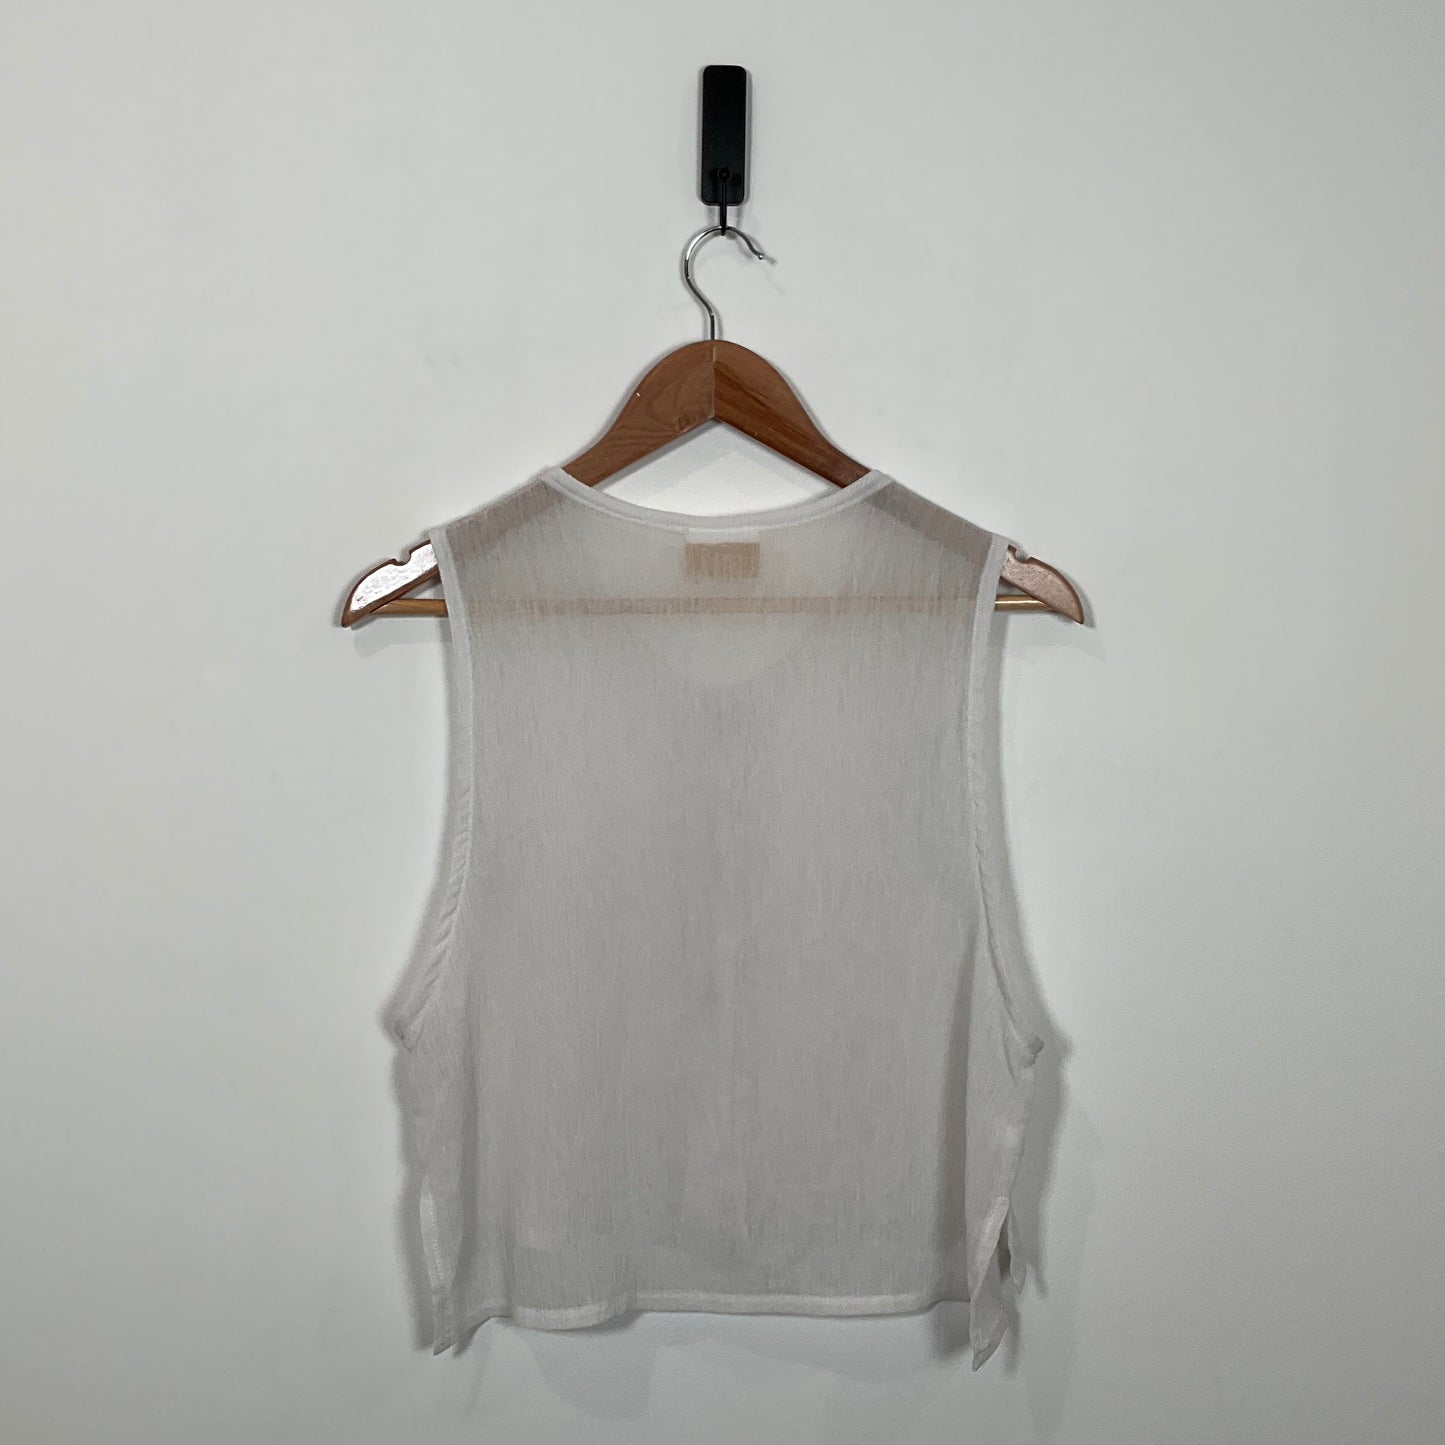 Jess - Sheer White Top Shirts & Tops